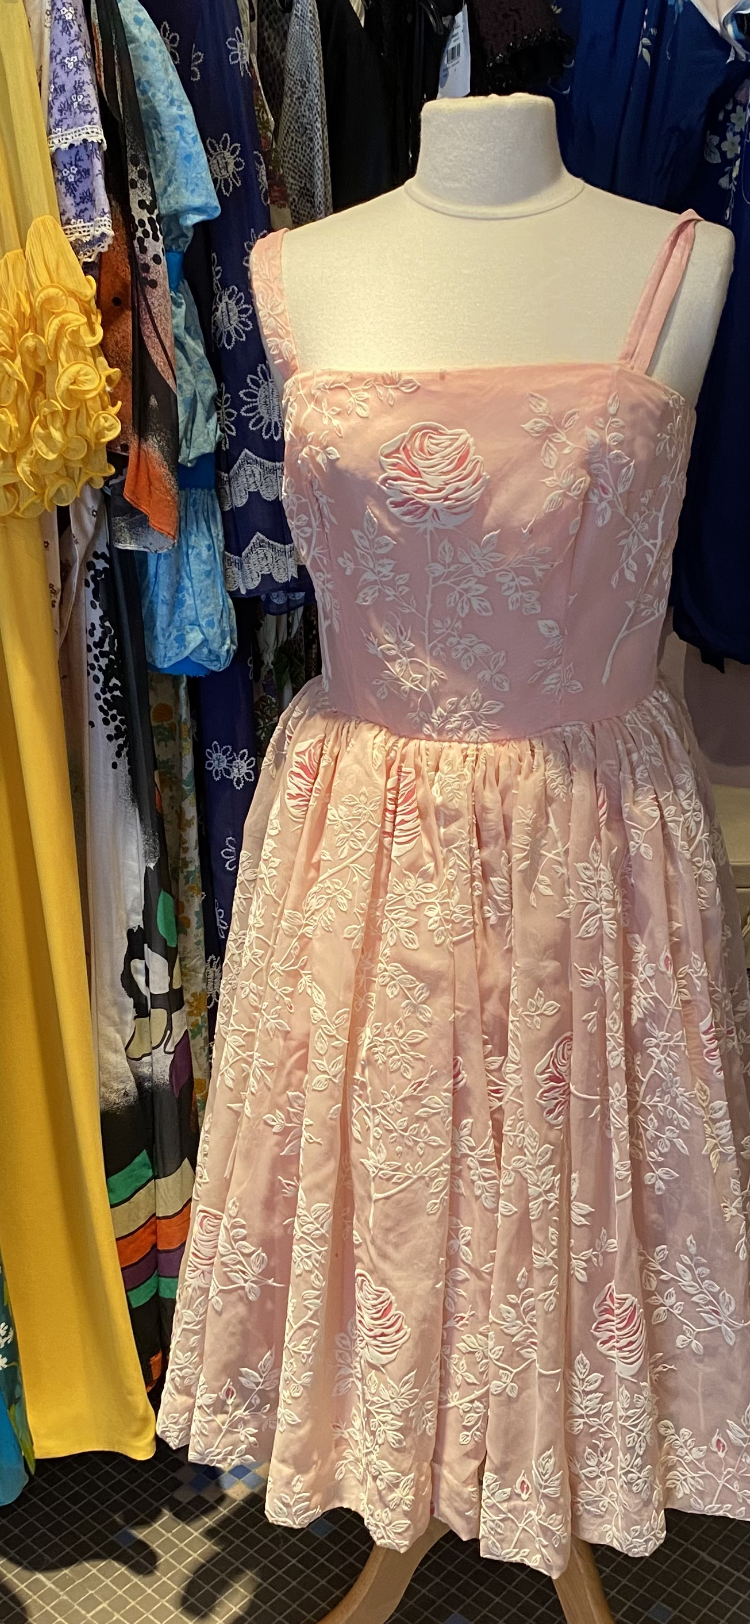 Melbray 50’s prom dress